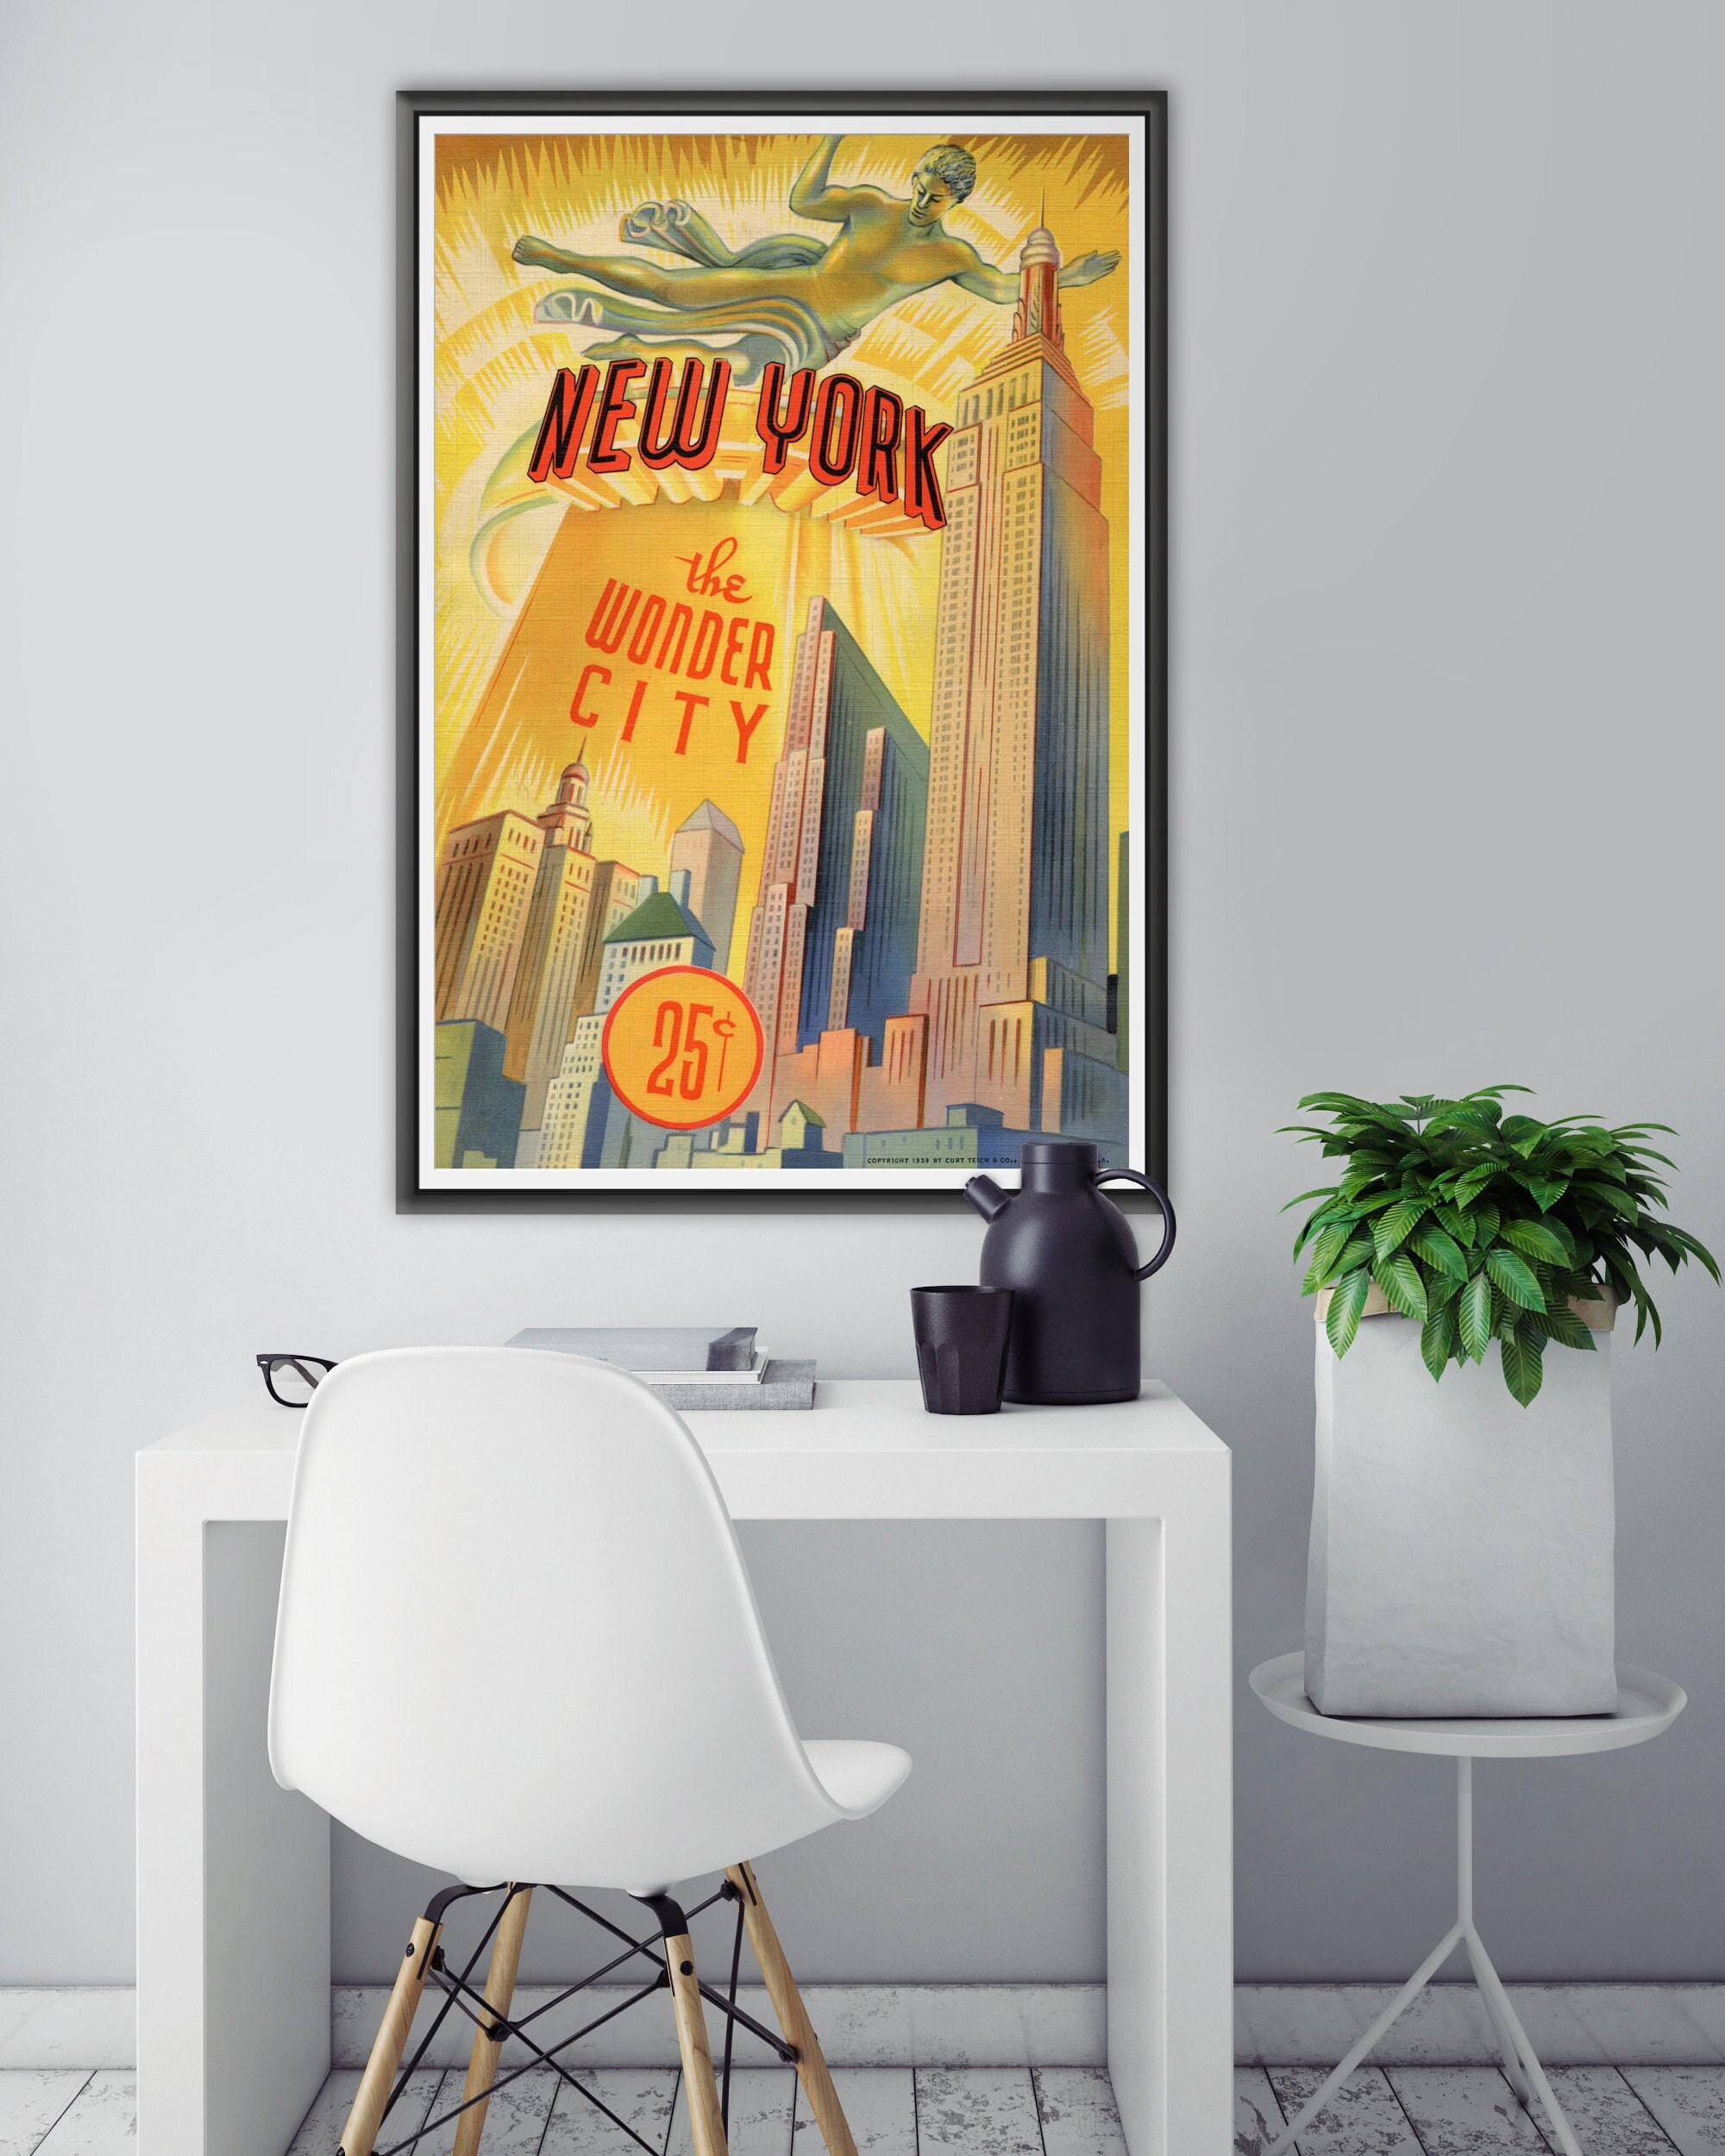 1939 New York The Wonder City POSTER Full-size | Etsy